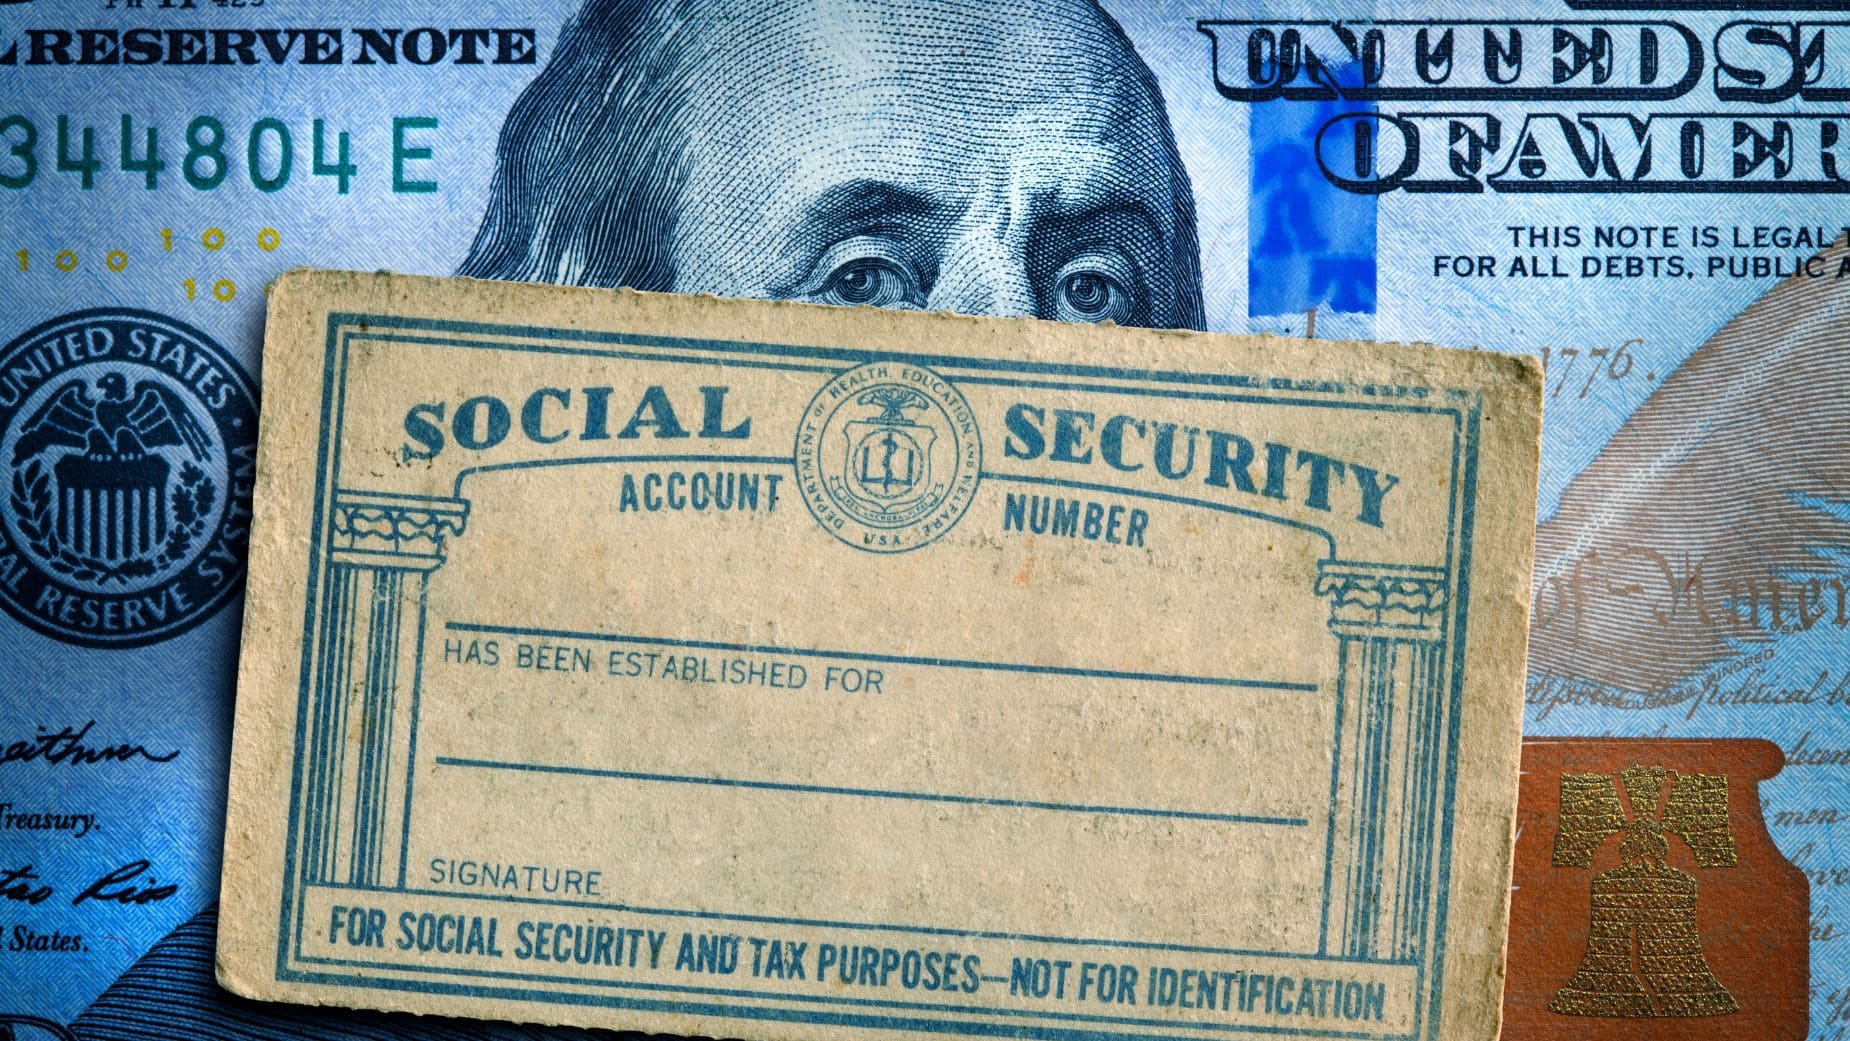 A new bill could fix Social Security problems